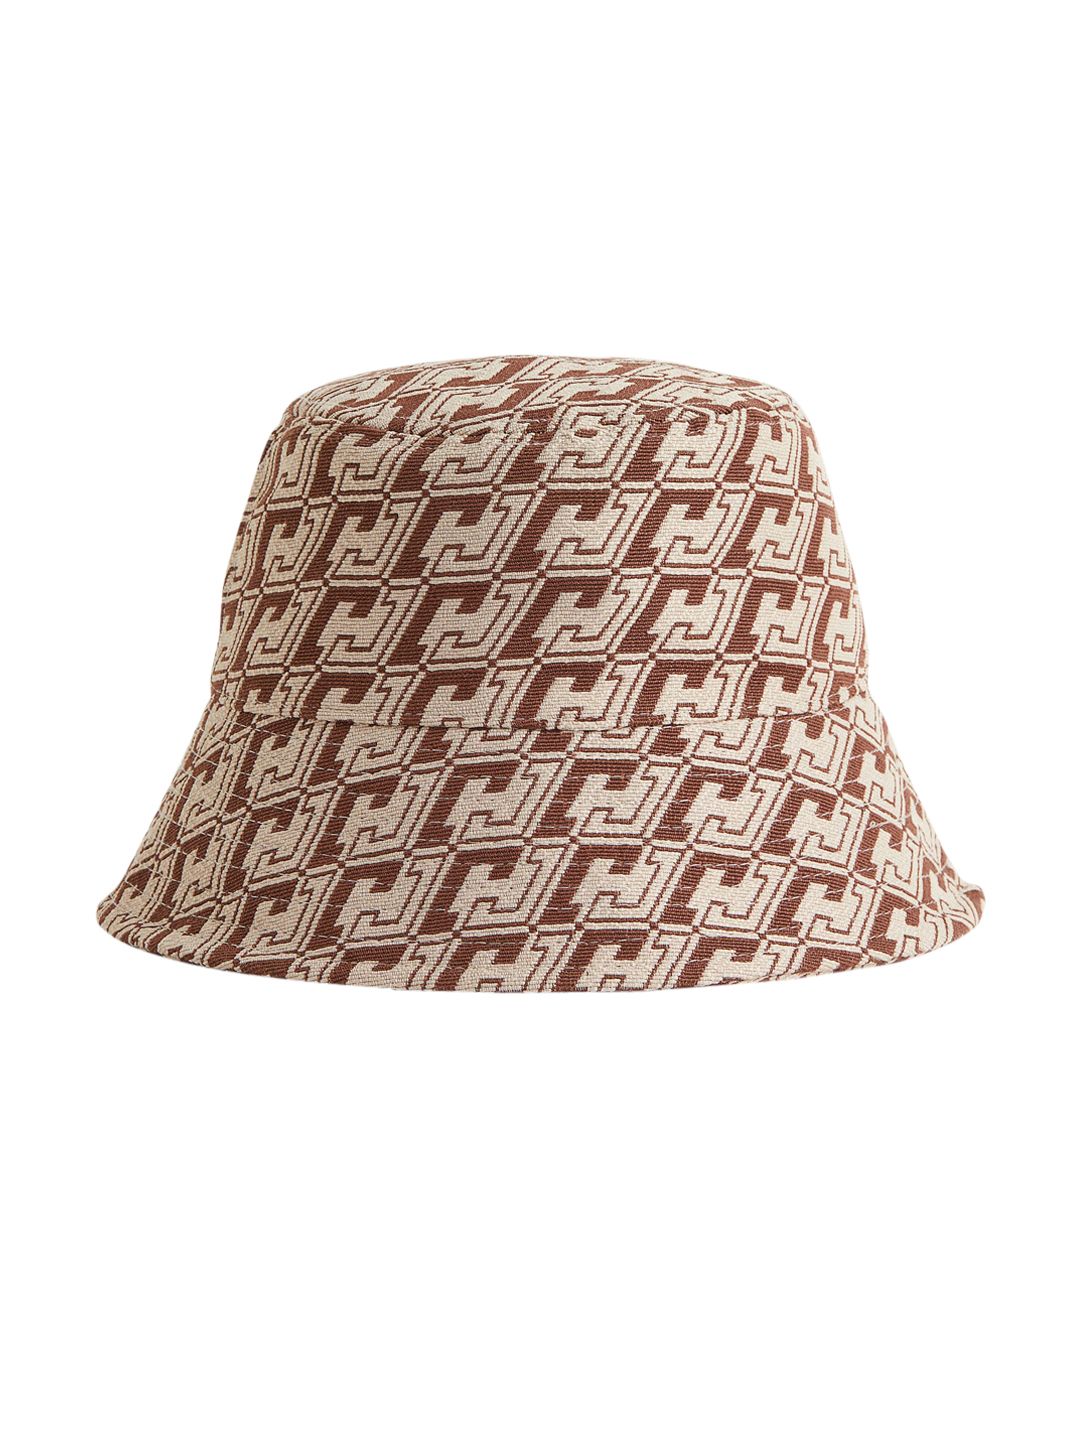 H&M Women Beige Printed Bucket Hat Price in India